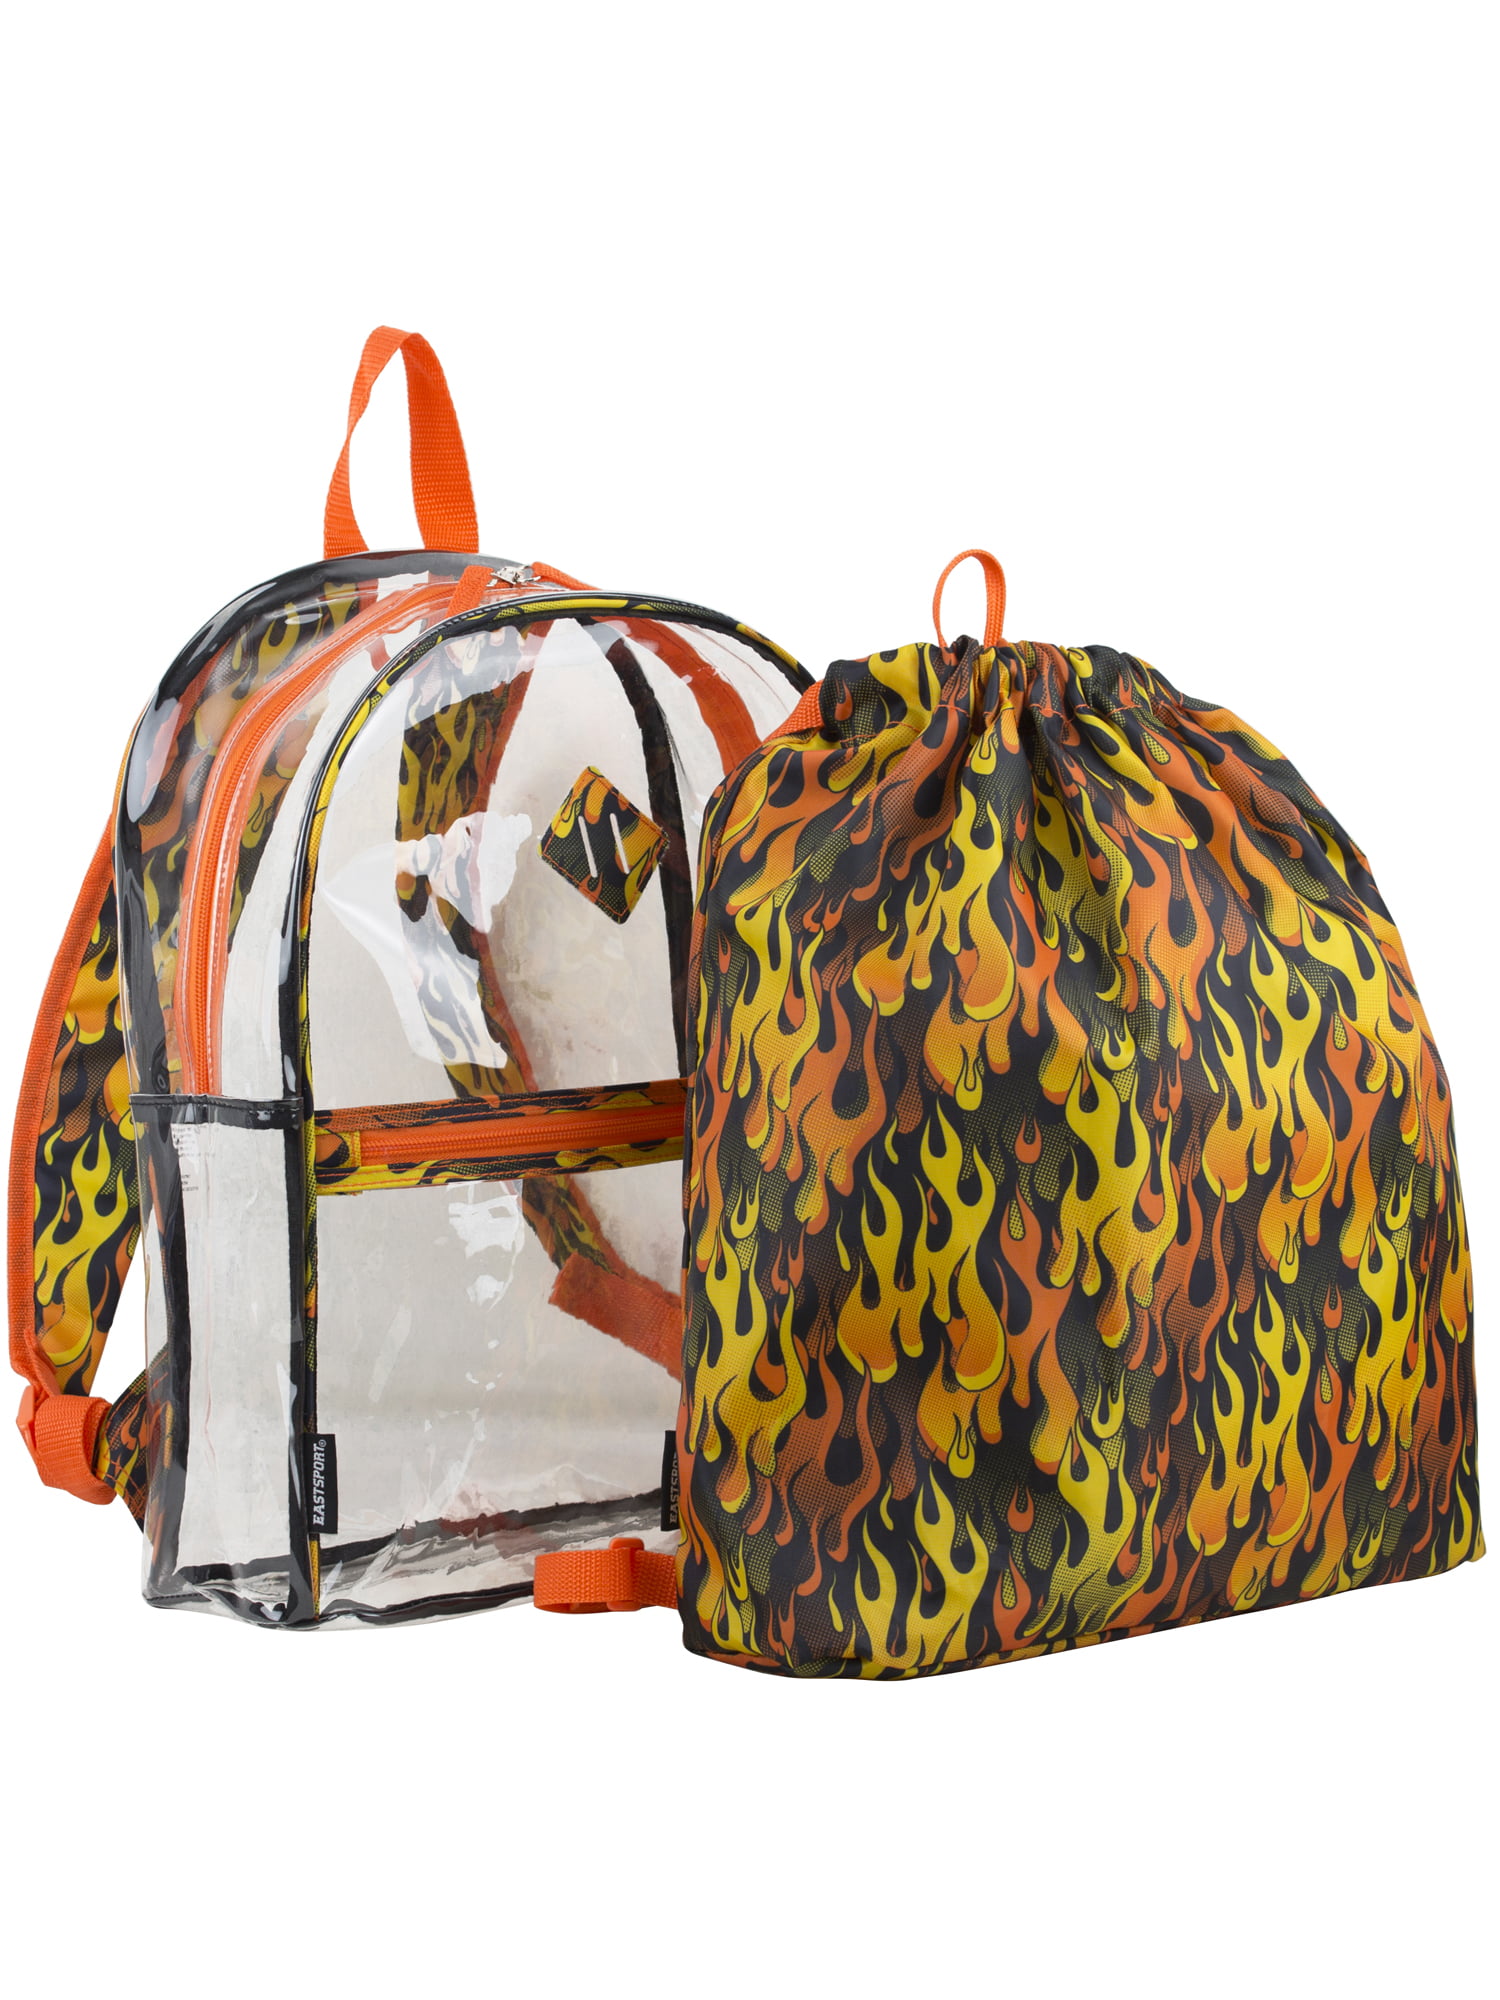 Buy Cheap Louis Vuitton Orange Black Backpack 1:1 Quality